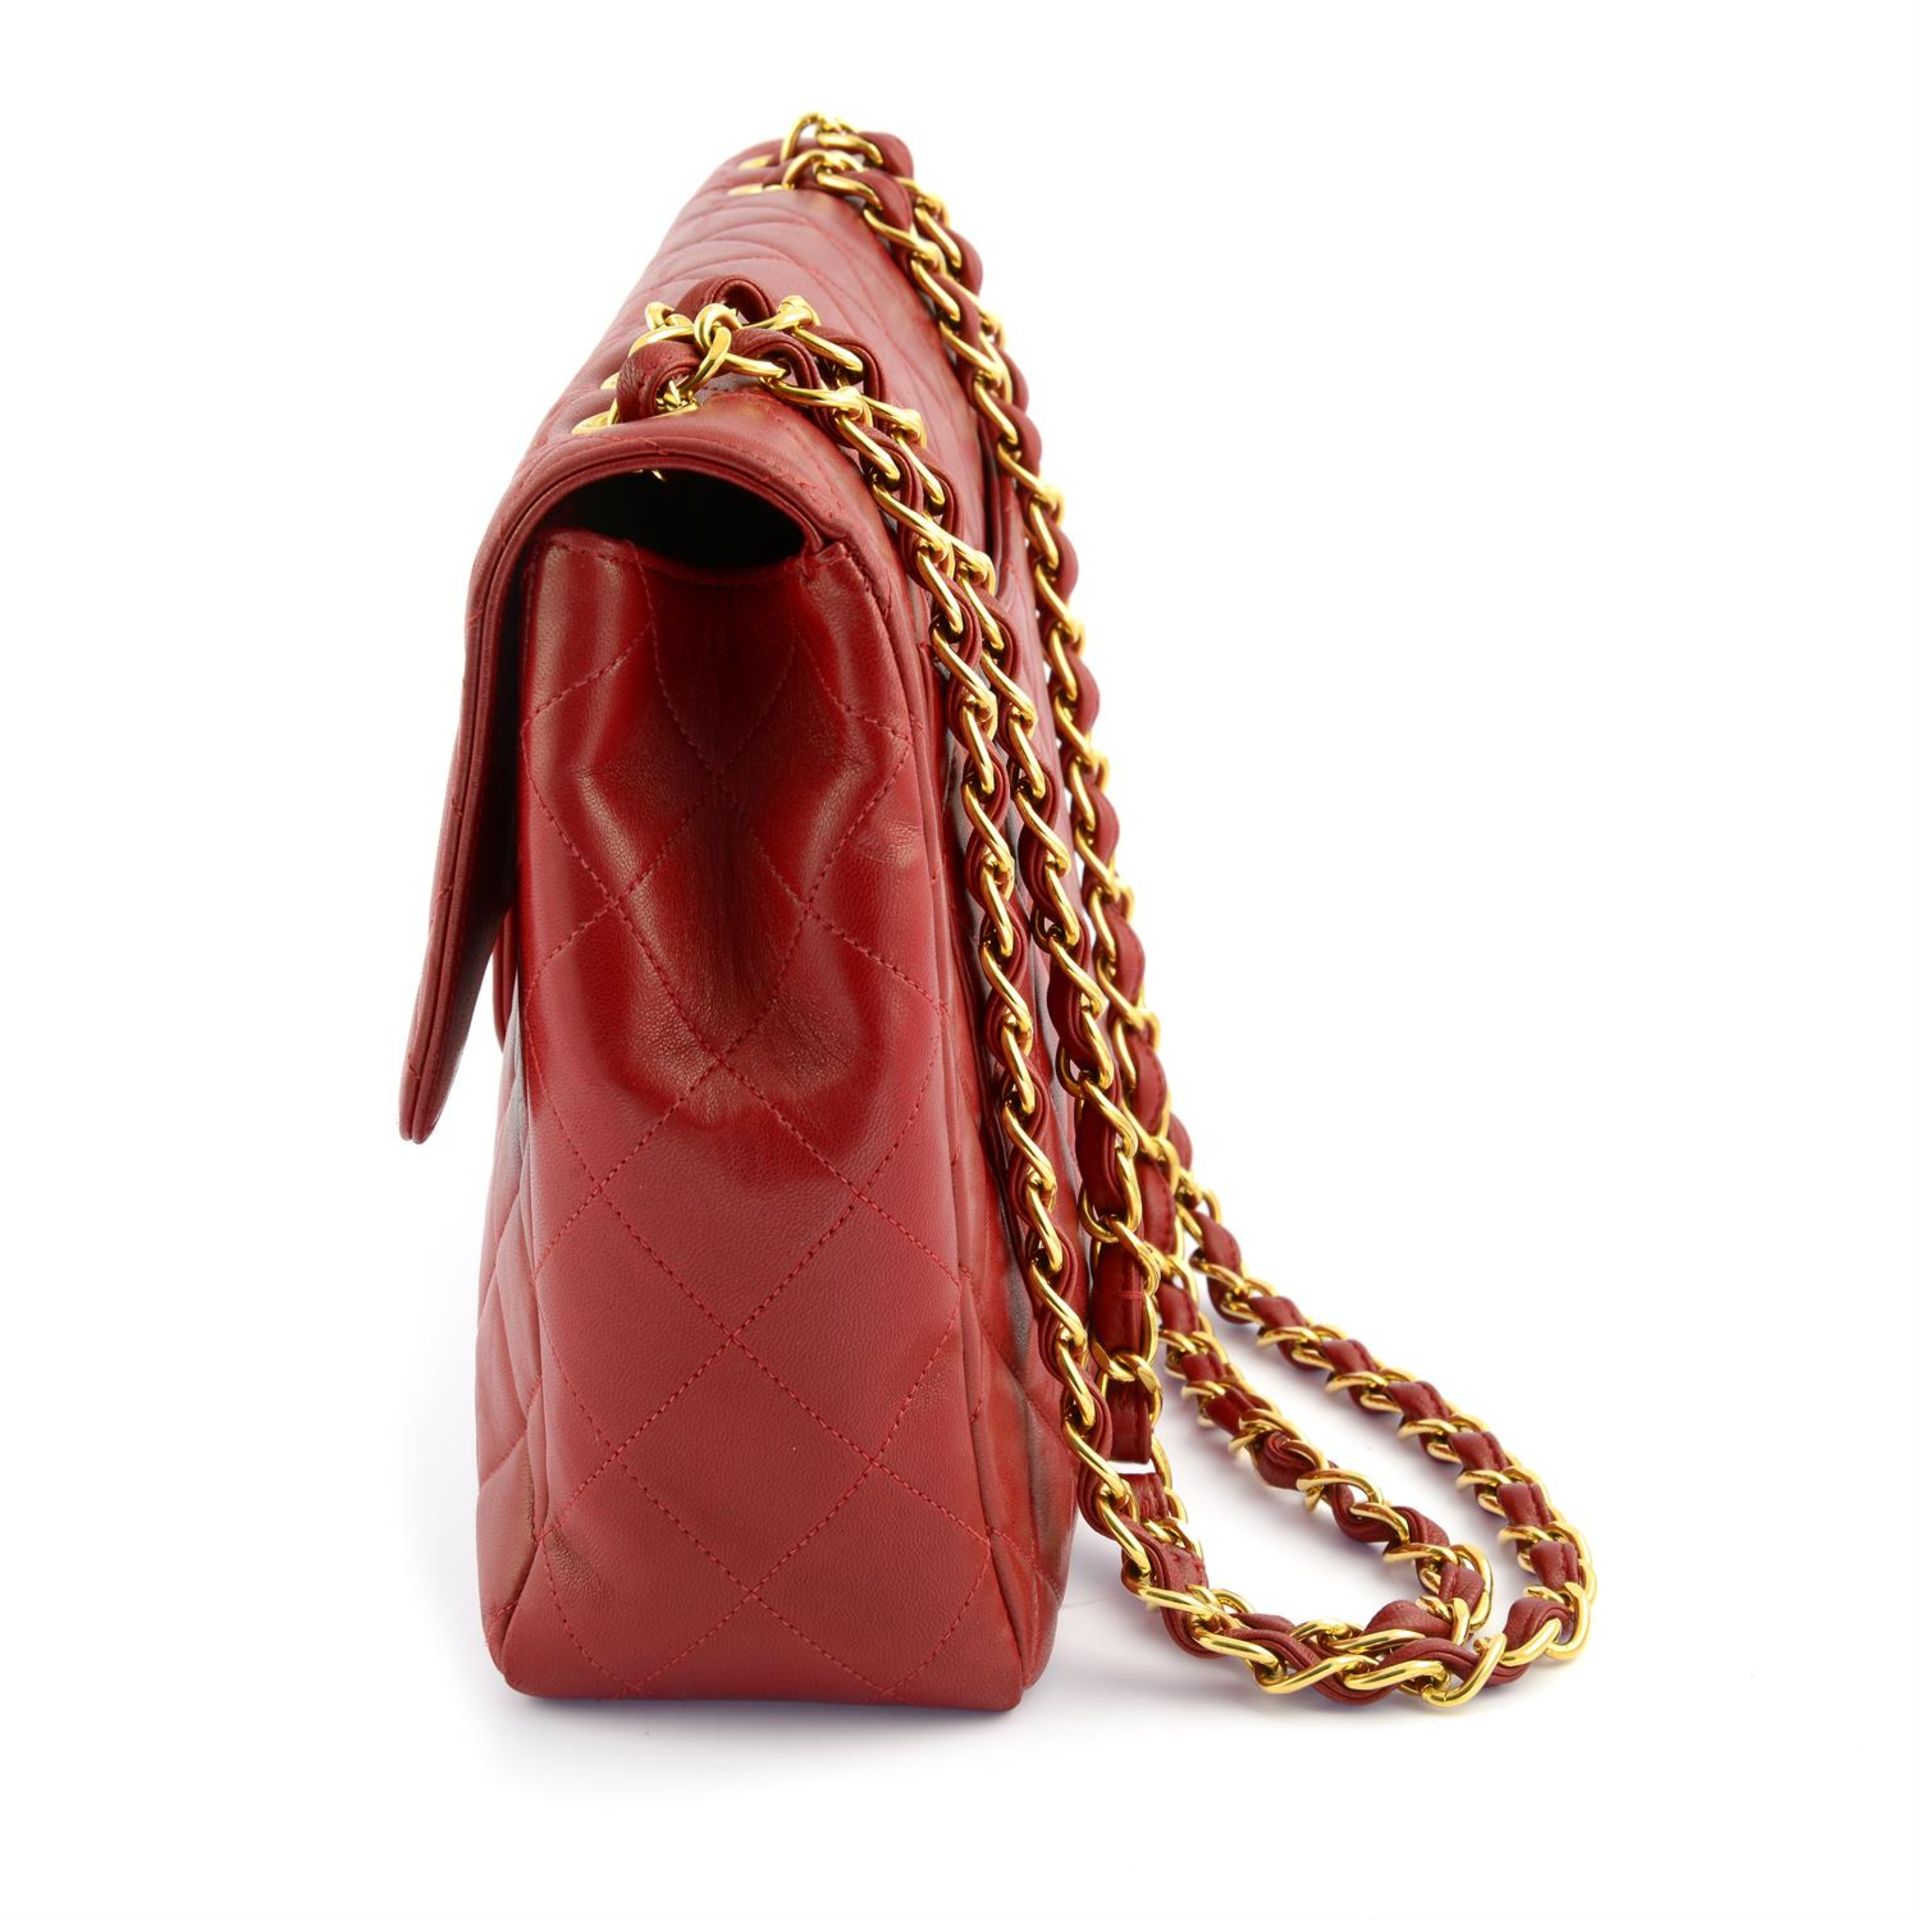 CHANEL - a red lambskin leather Jumbo flap handbag. - Image 3 of 6